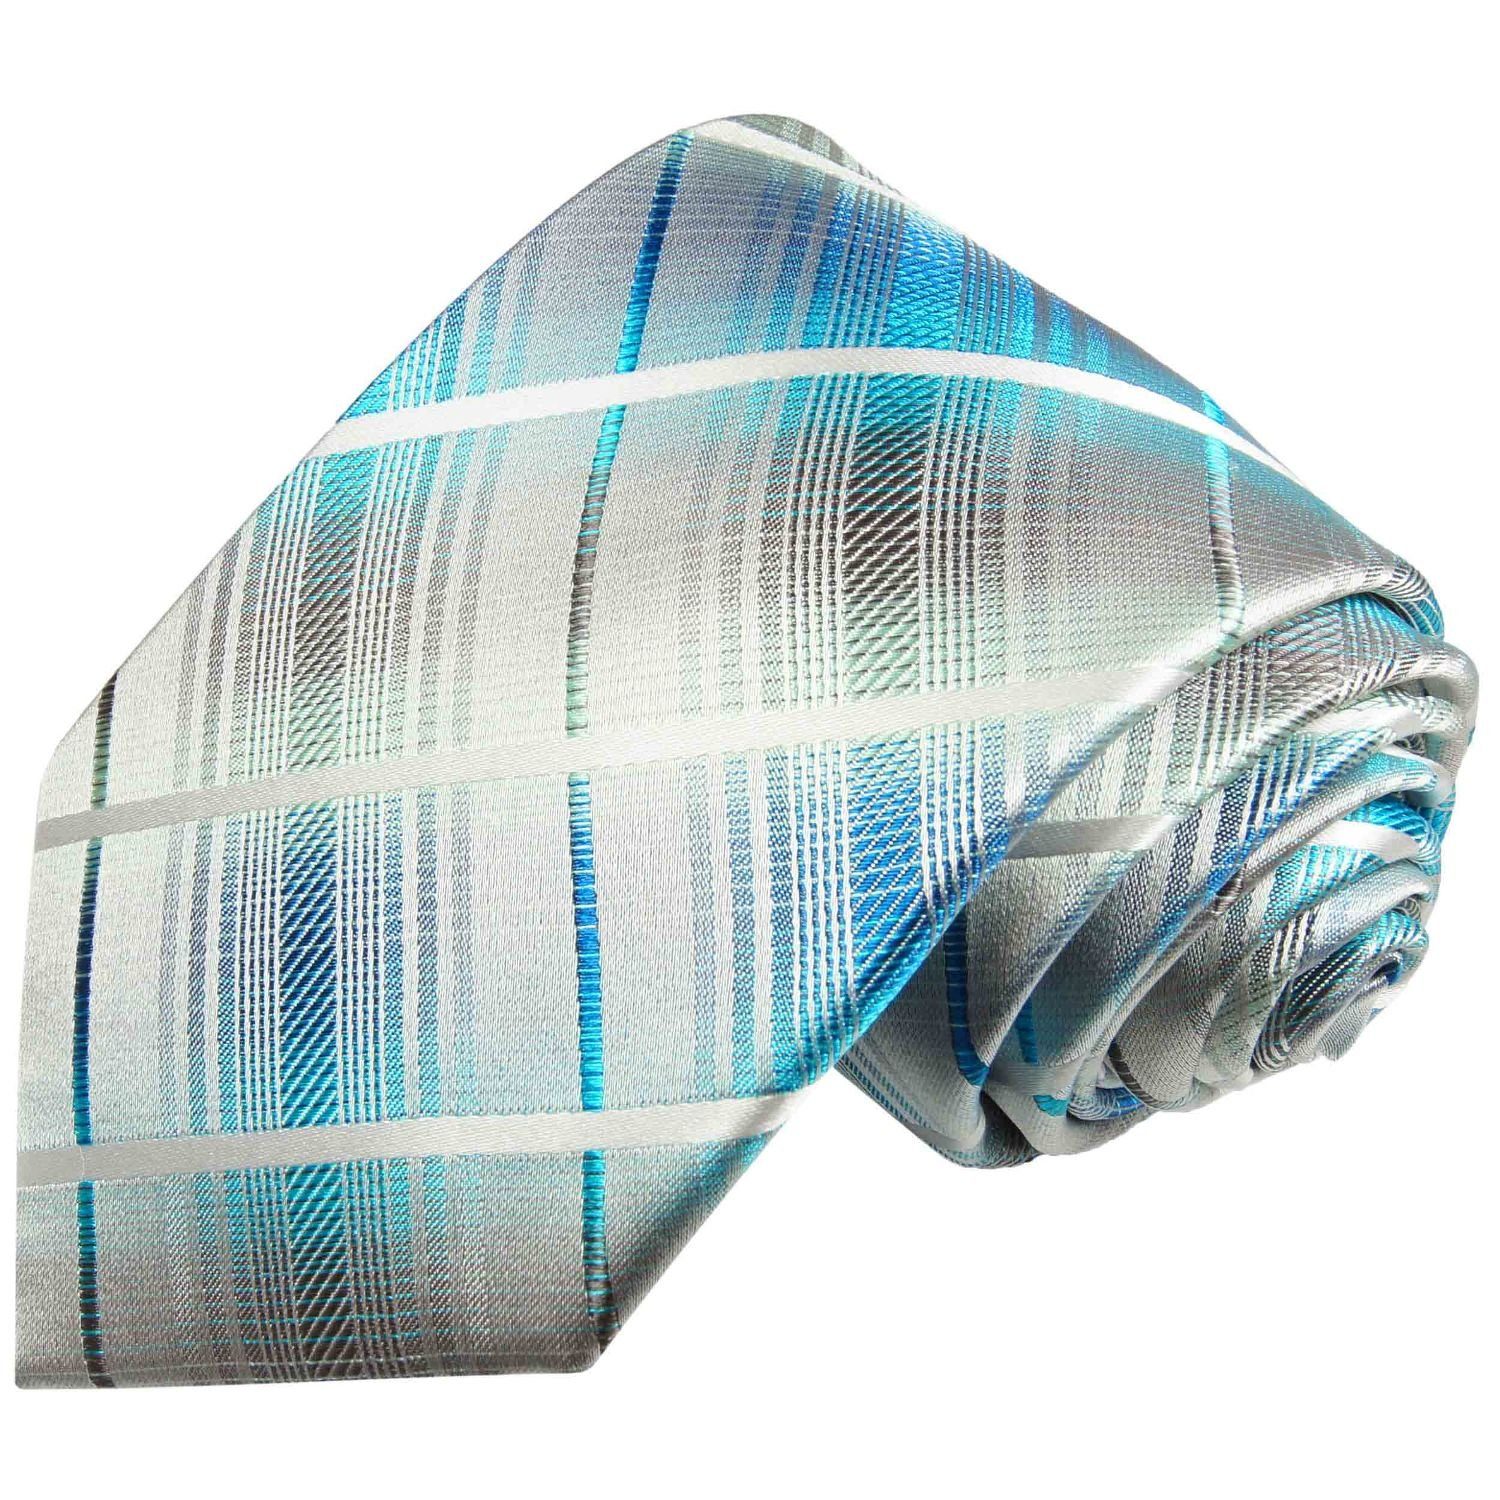 Paul Malone Krawatte Designer Seidenkrawatte Herren Schlips modern gestreift 100% Seide Schmal (6cm), türkis grau 2027